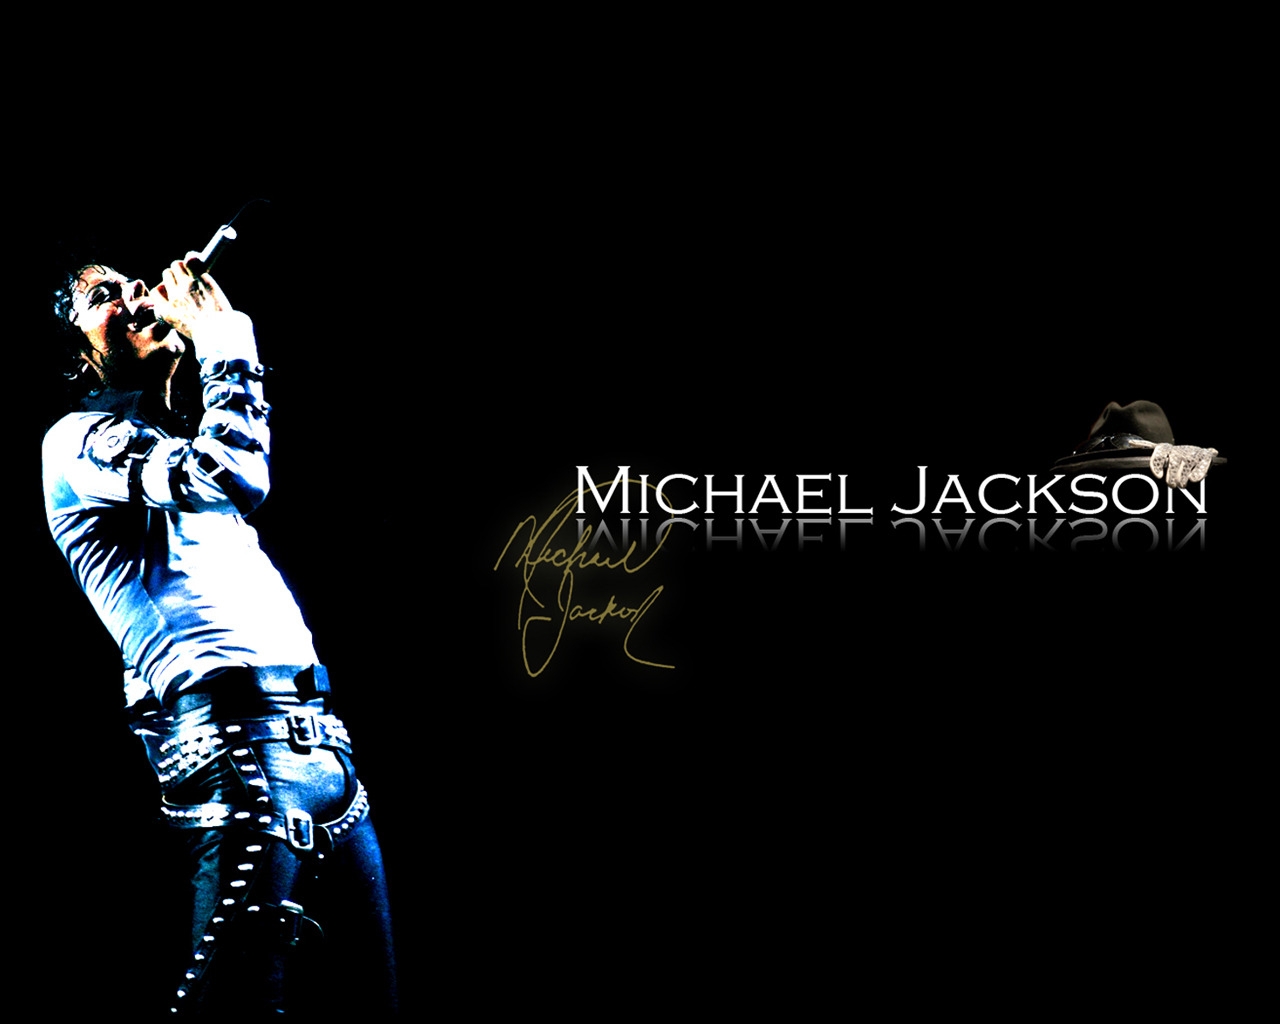 Michael Jackson for 1280 x 1024 resolution